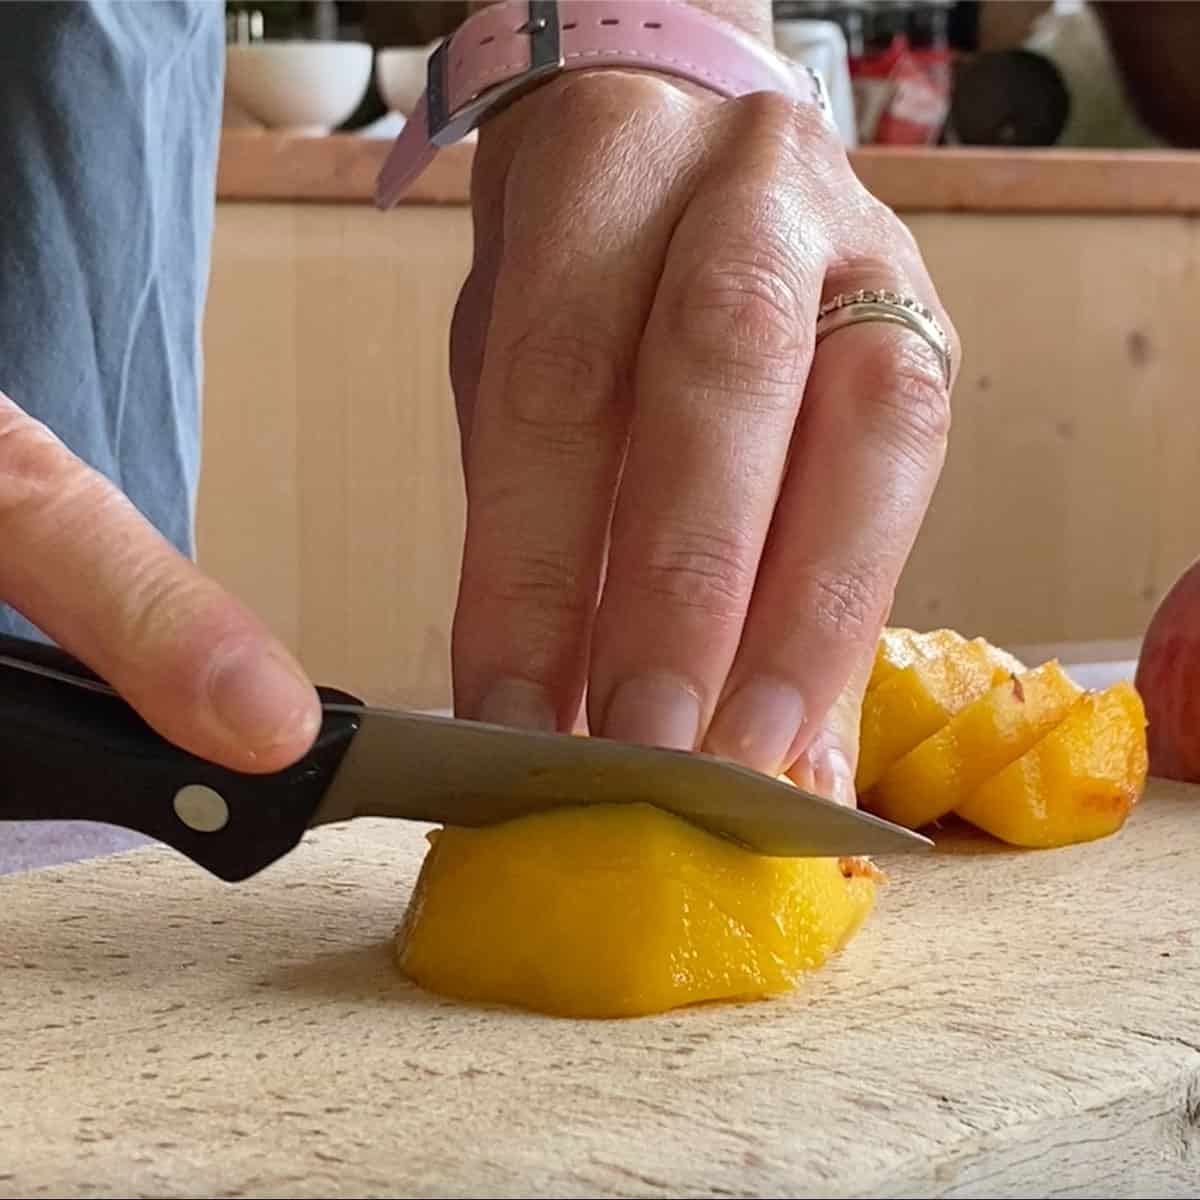 Process shot - slicing peaches